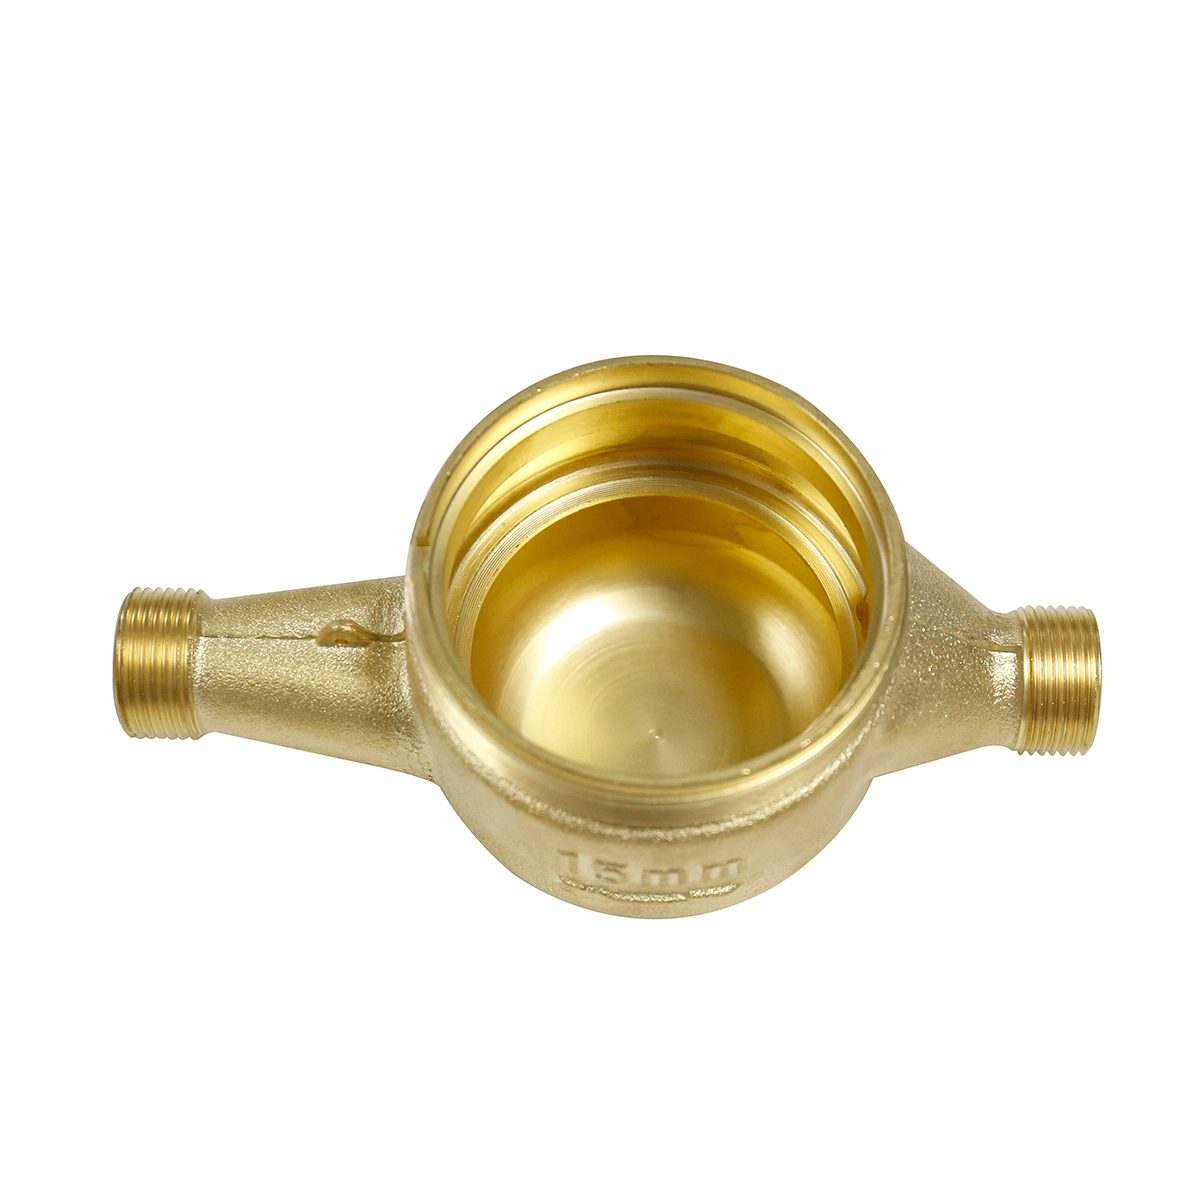 High Quality Brass Water Meter Body